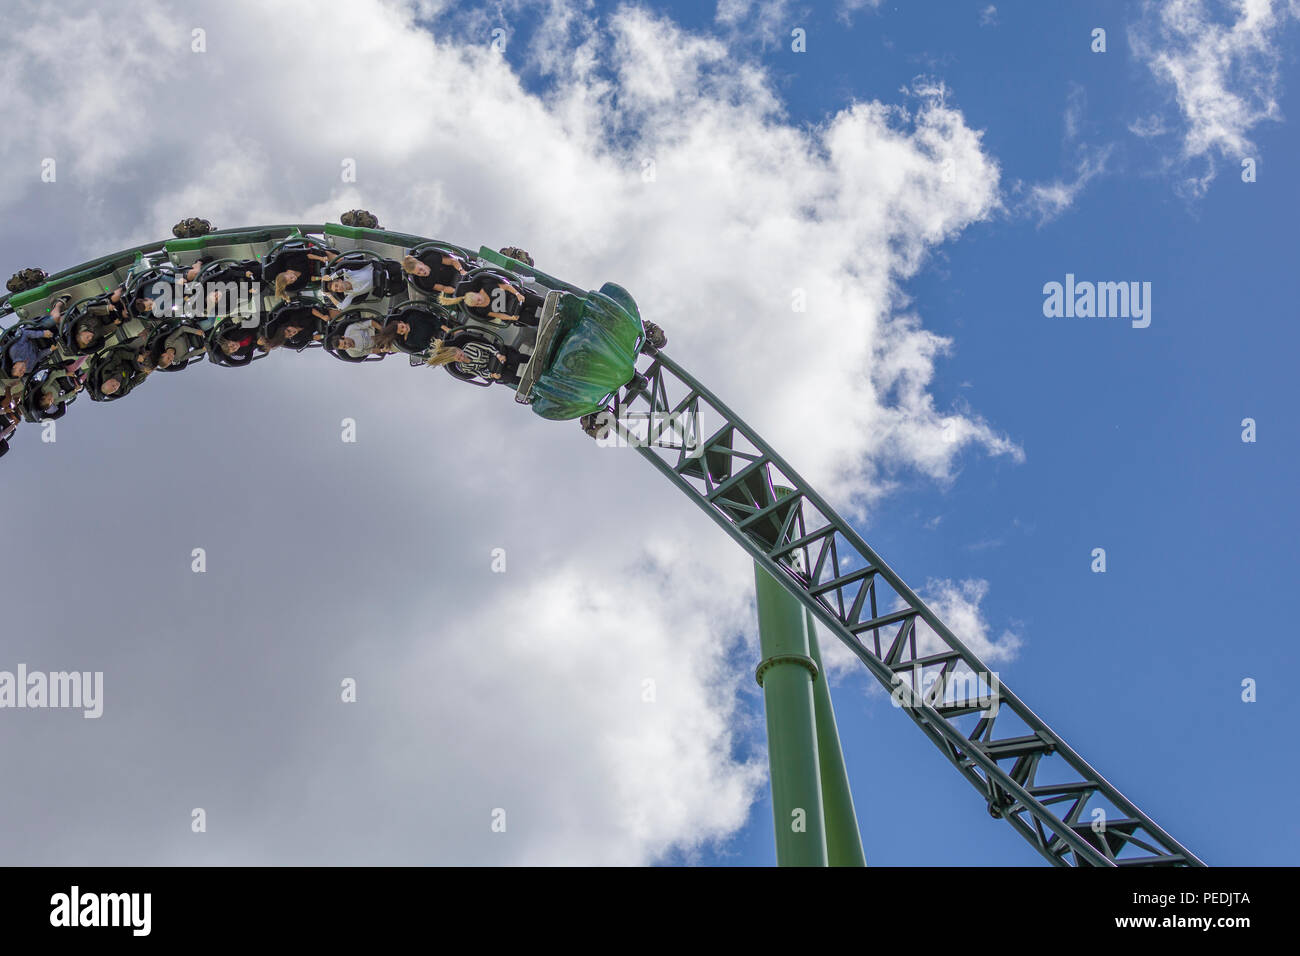 Helix roller coaster at Liseberg set against blue sky Stock Photo